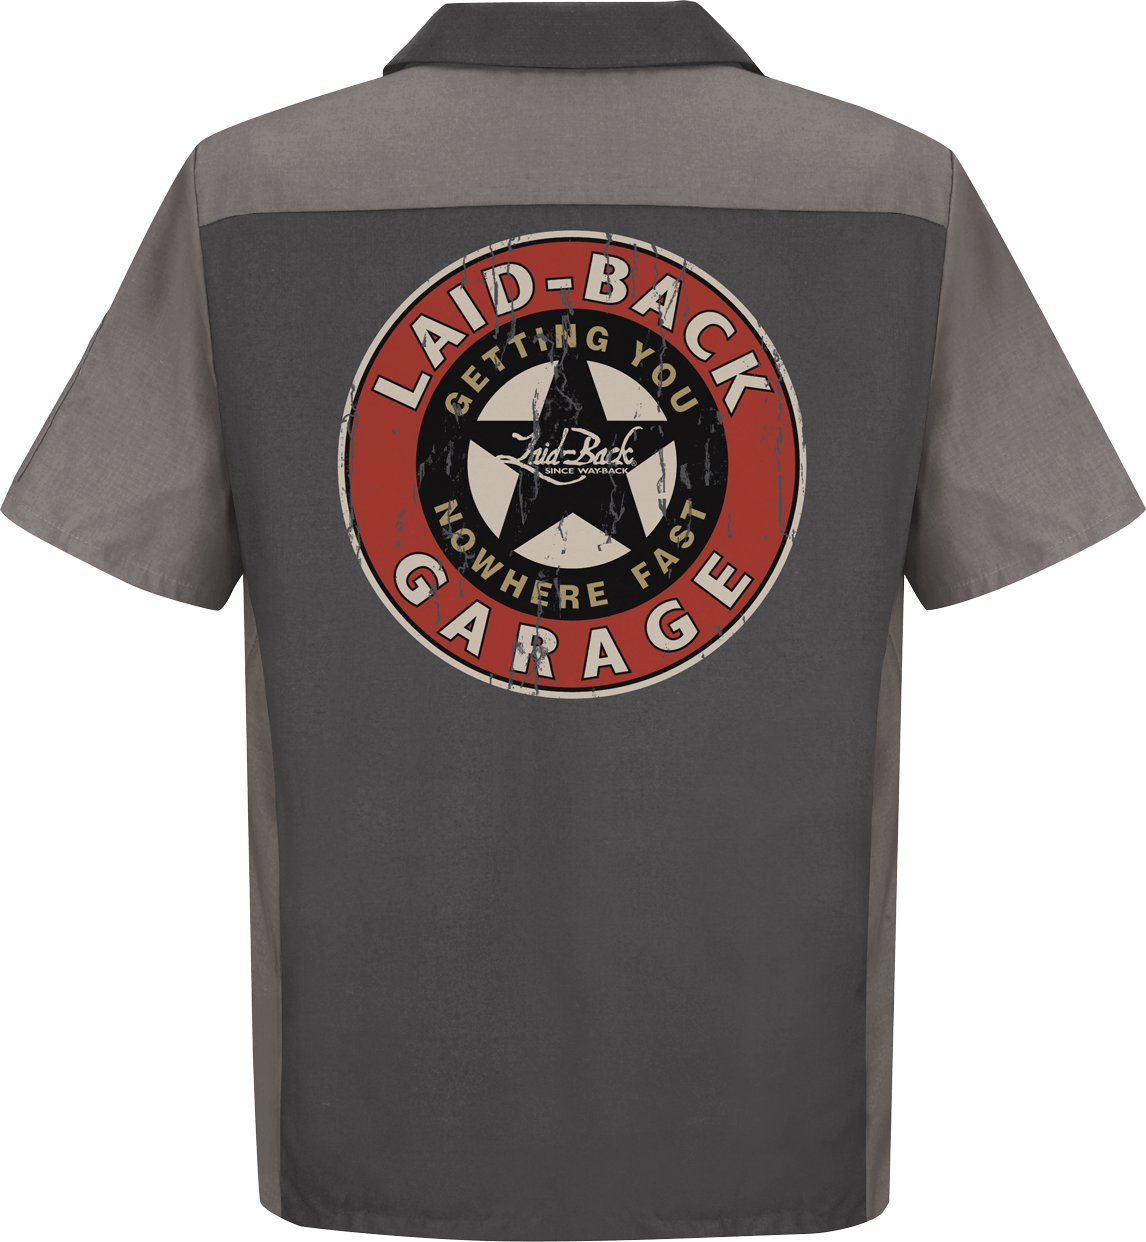 Garage Star 2-Tone Mechanic Shirt - Laid-Back